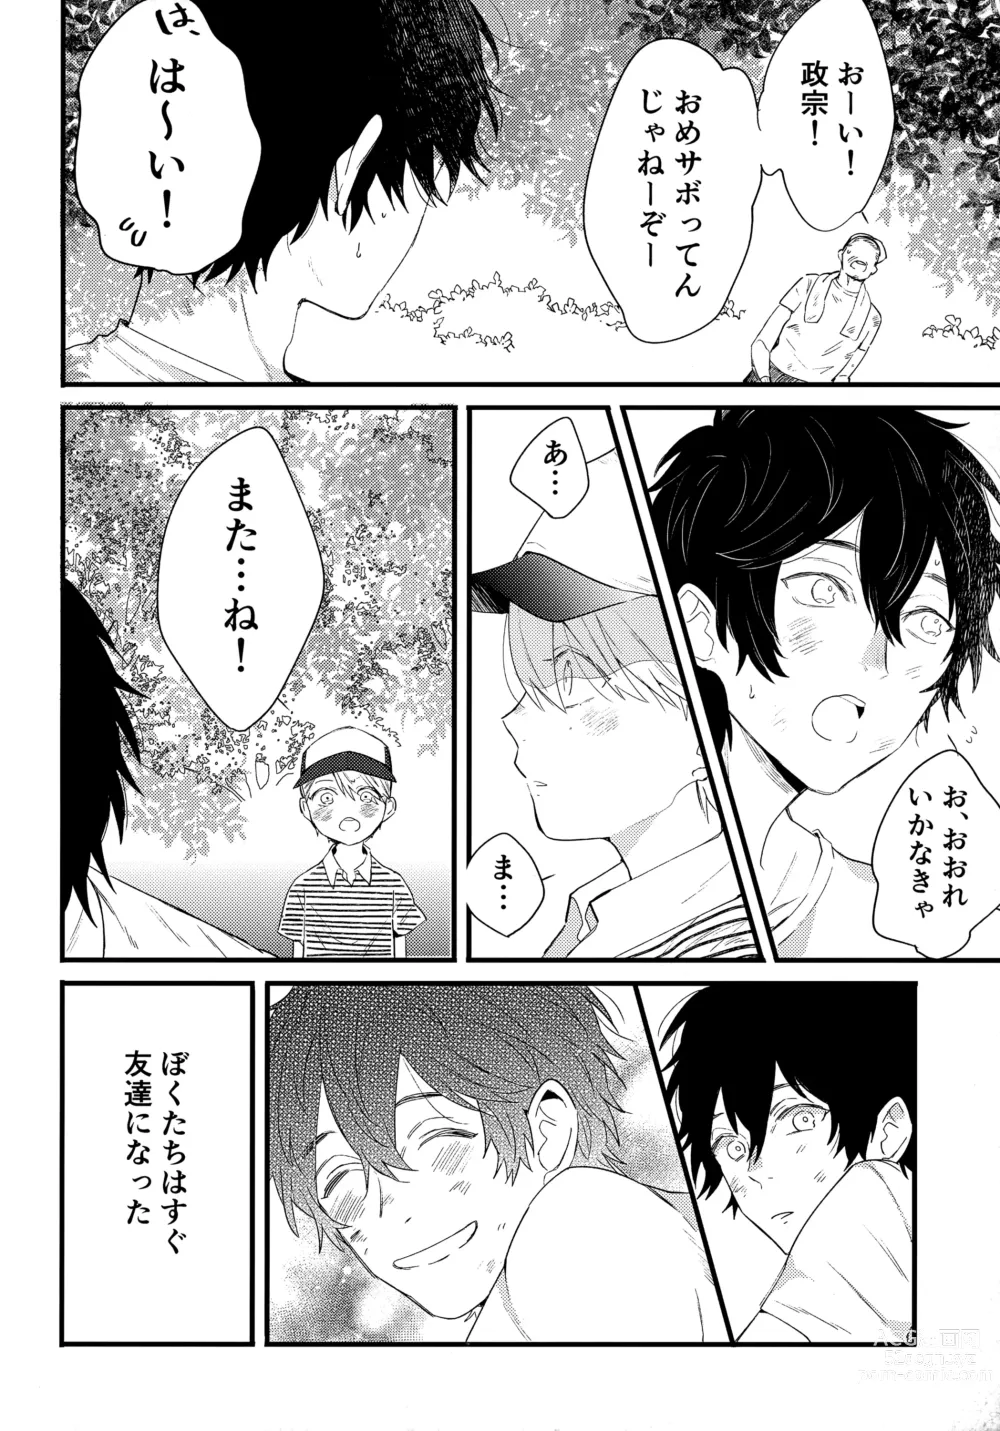 Page 9 of doujinshi Kagerou no Hikari - light of heat haze